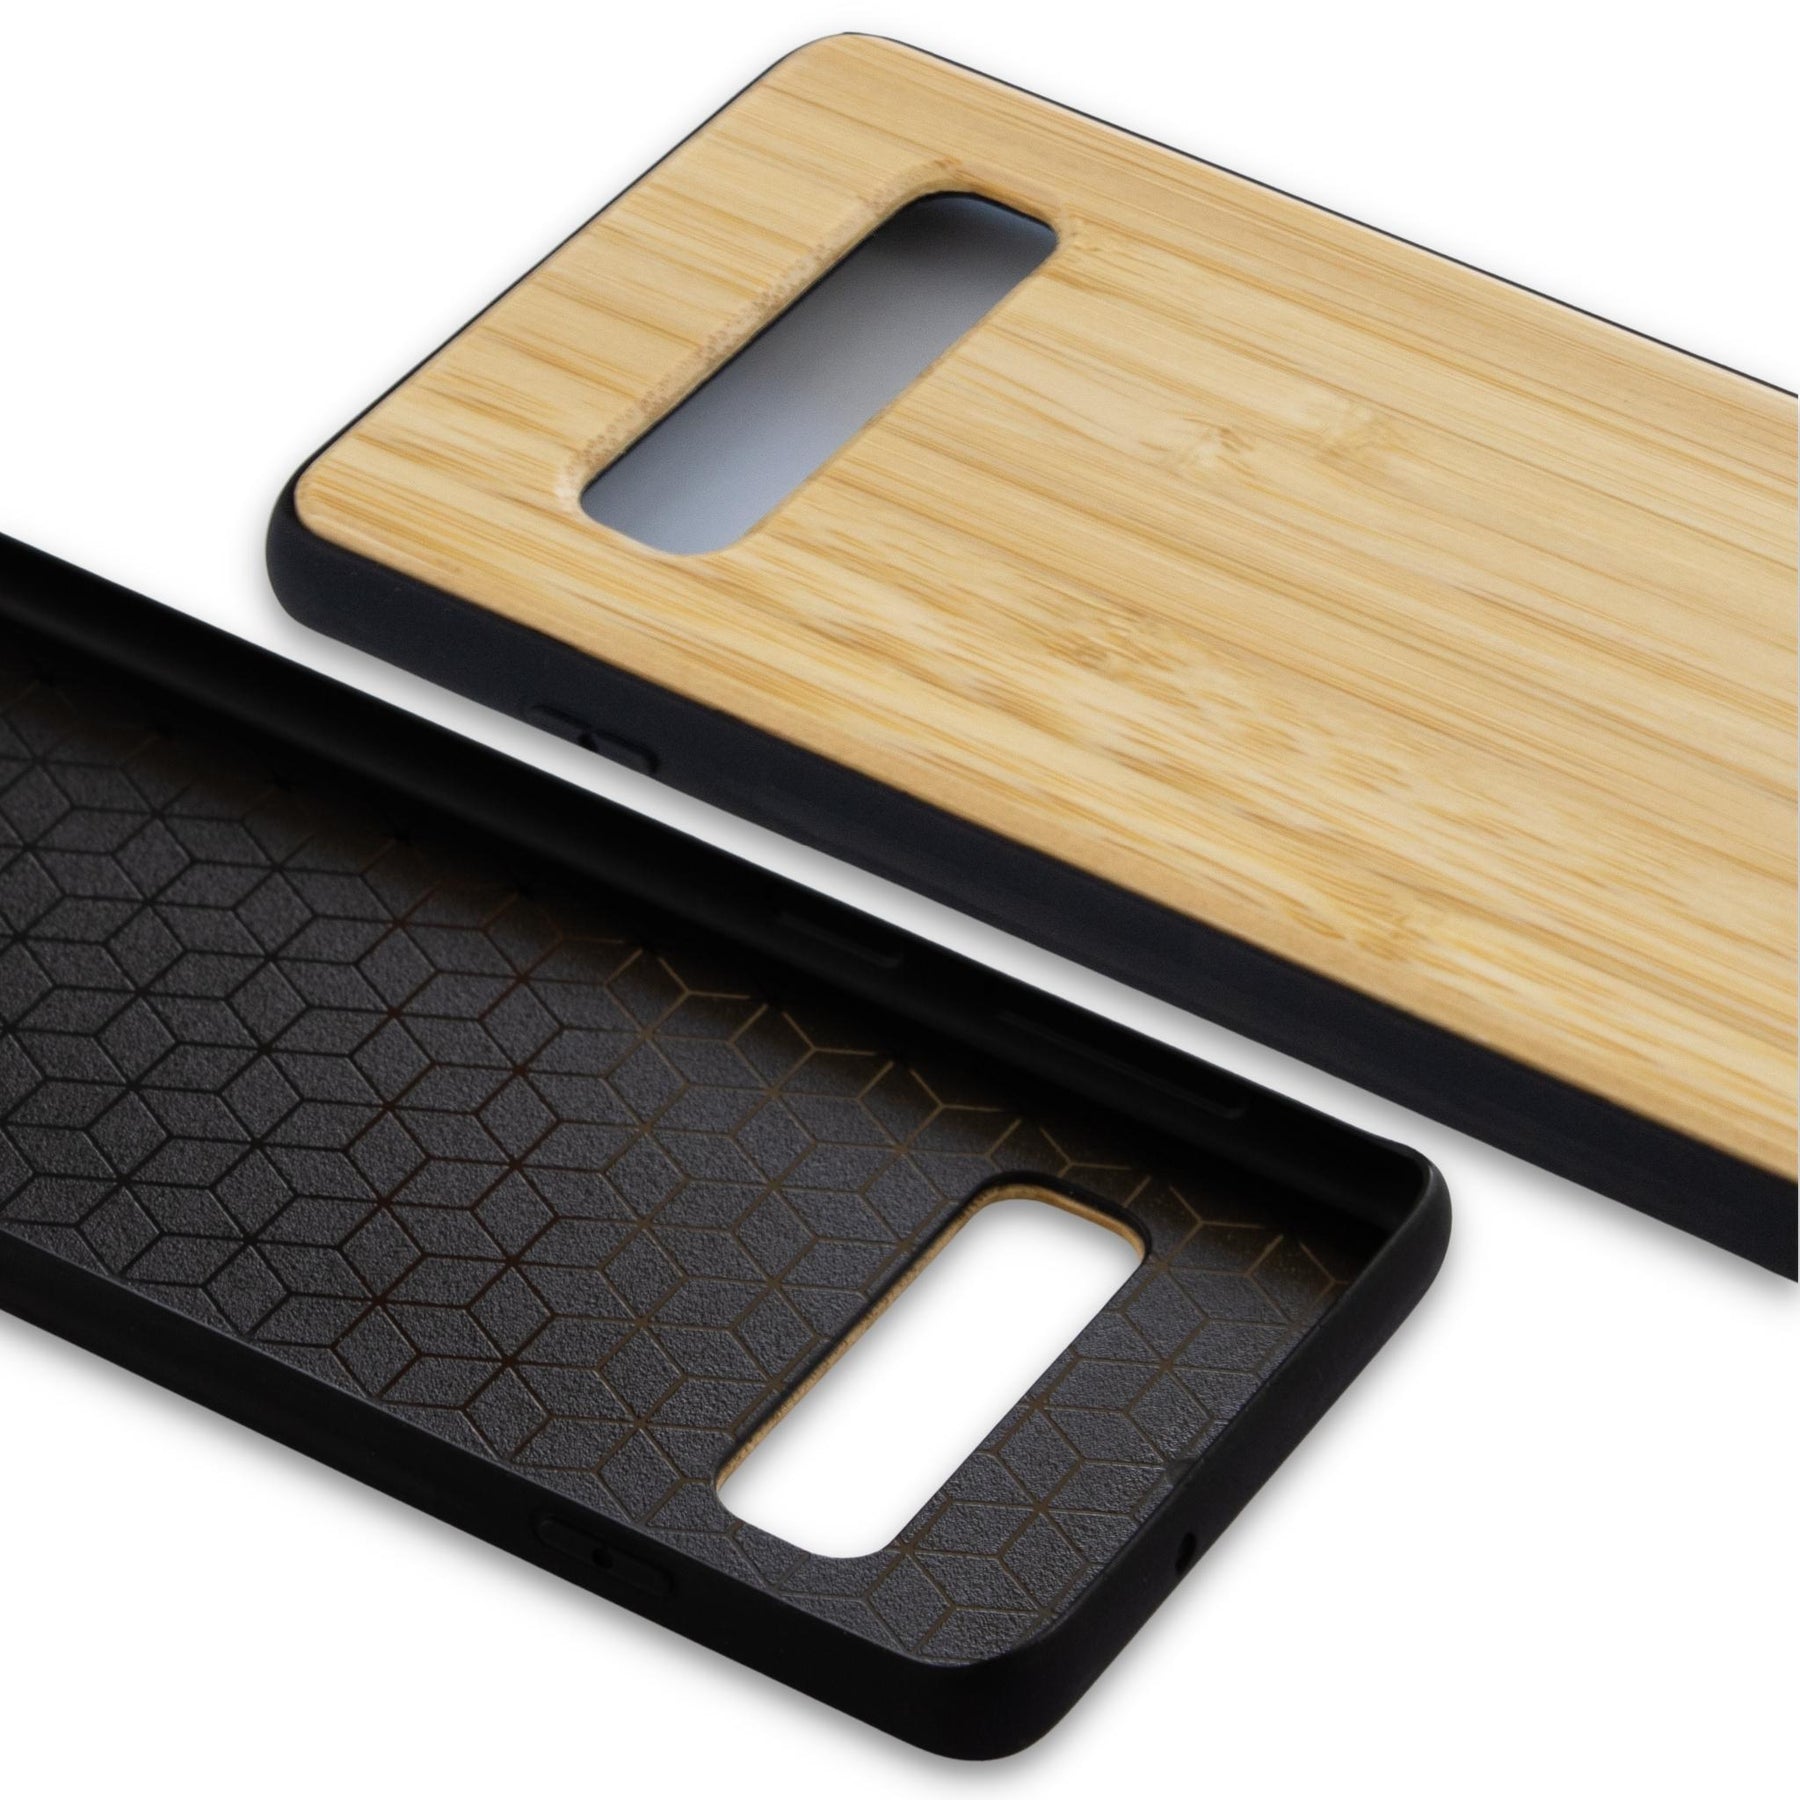 Samsung GS10 Wooden Case + Screen Protector